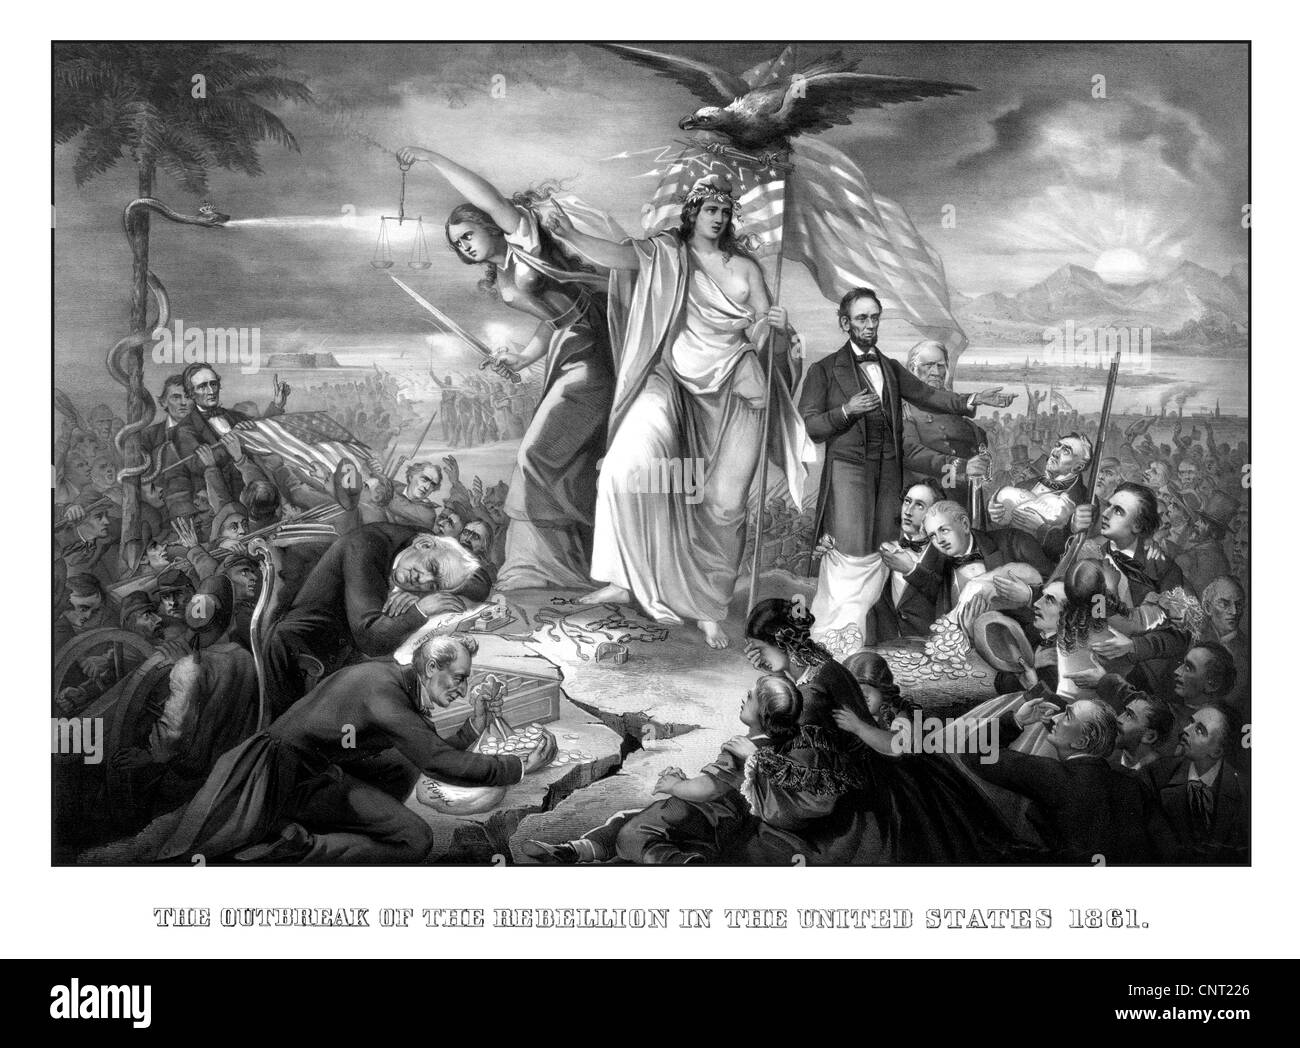 Guerra Civil vintage restaurada digitalmente imprimir de Lady Liberty, la bandera americana, un águila calva, y Abraham Lincoln. Foto de stock